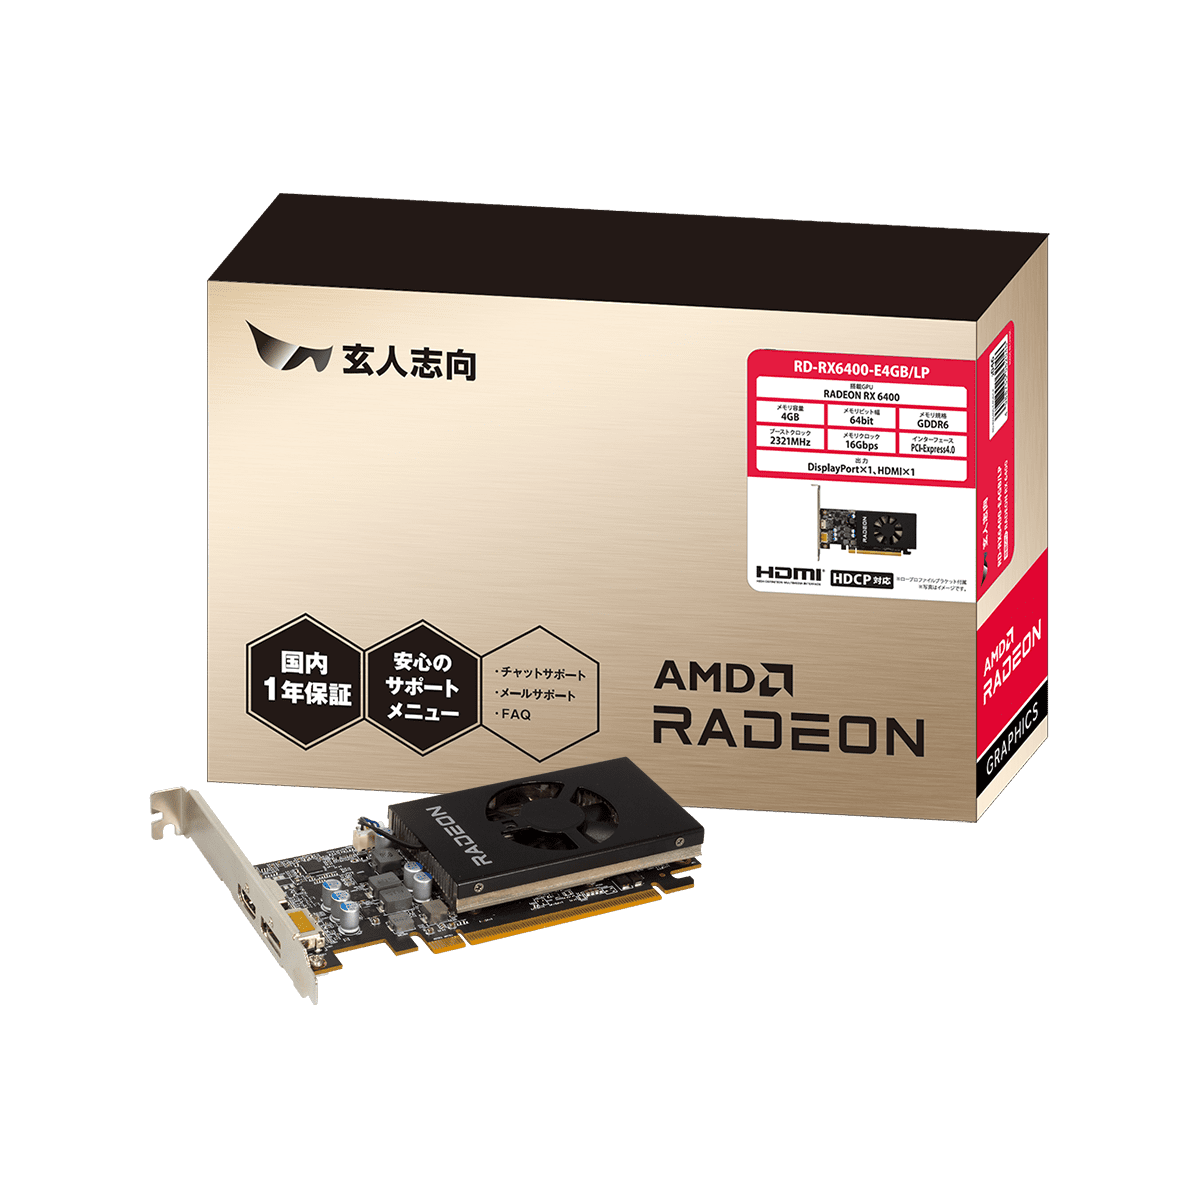 Radeon RX 6400 搭載 ロープロファイル対応 グラフィックボード (PCI-Express) RD-RX6400-E4GB/LP